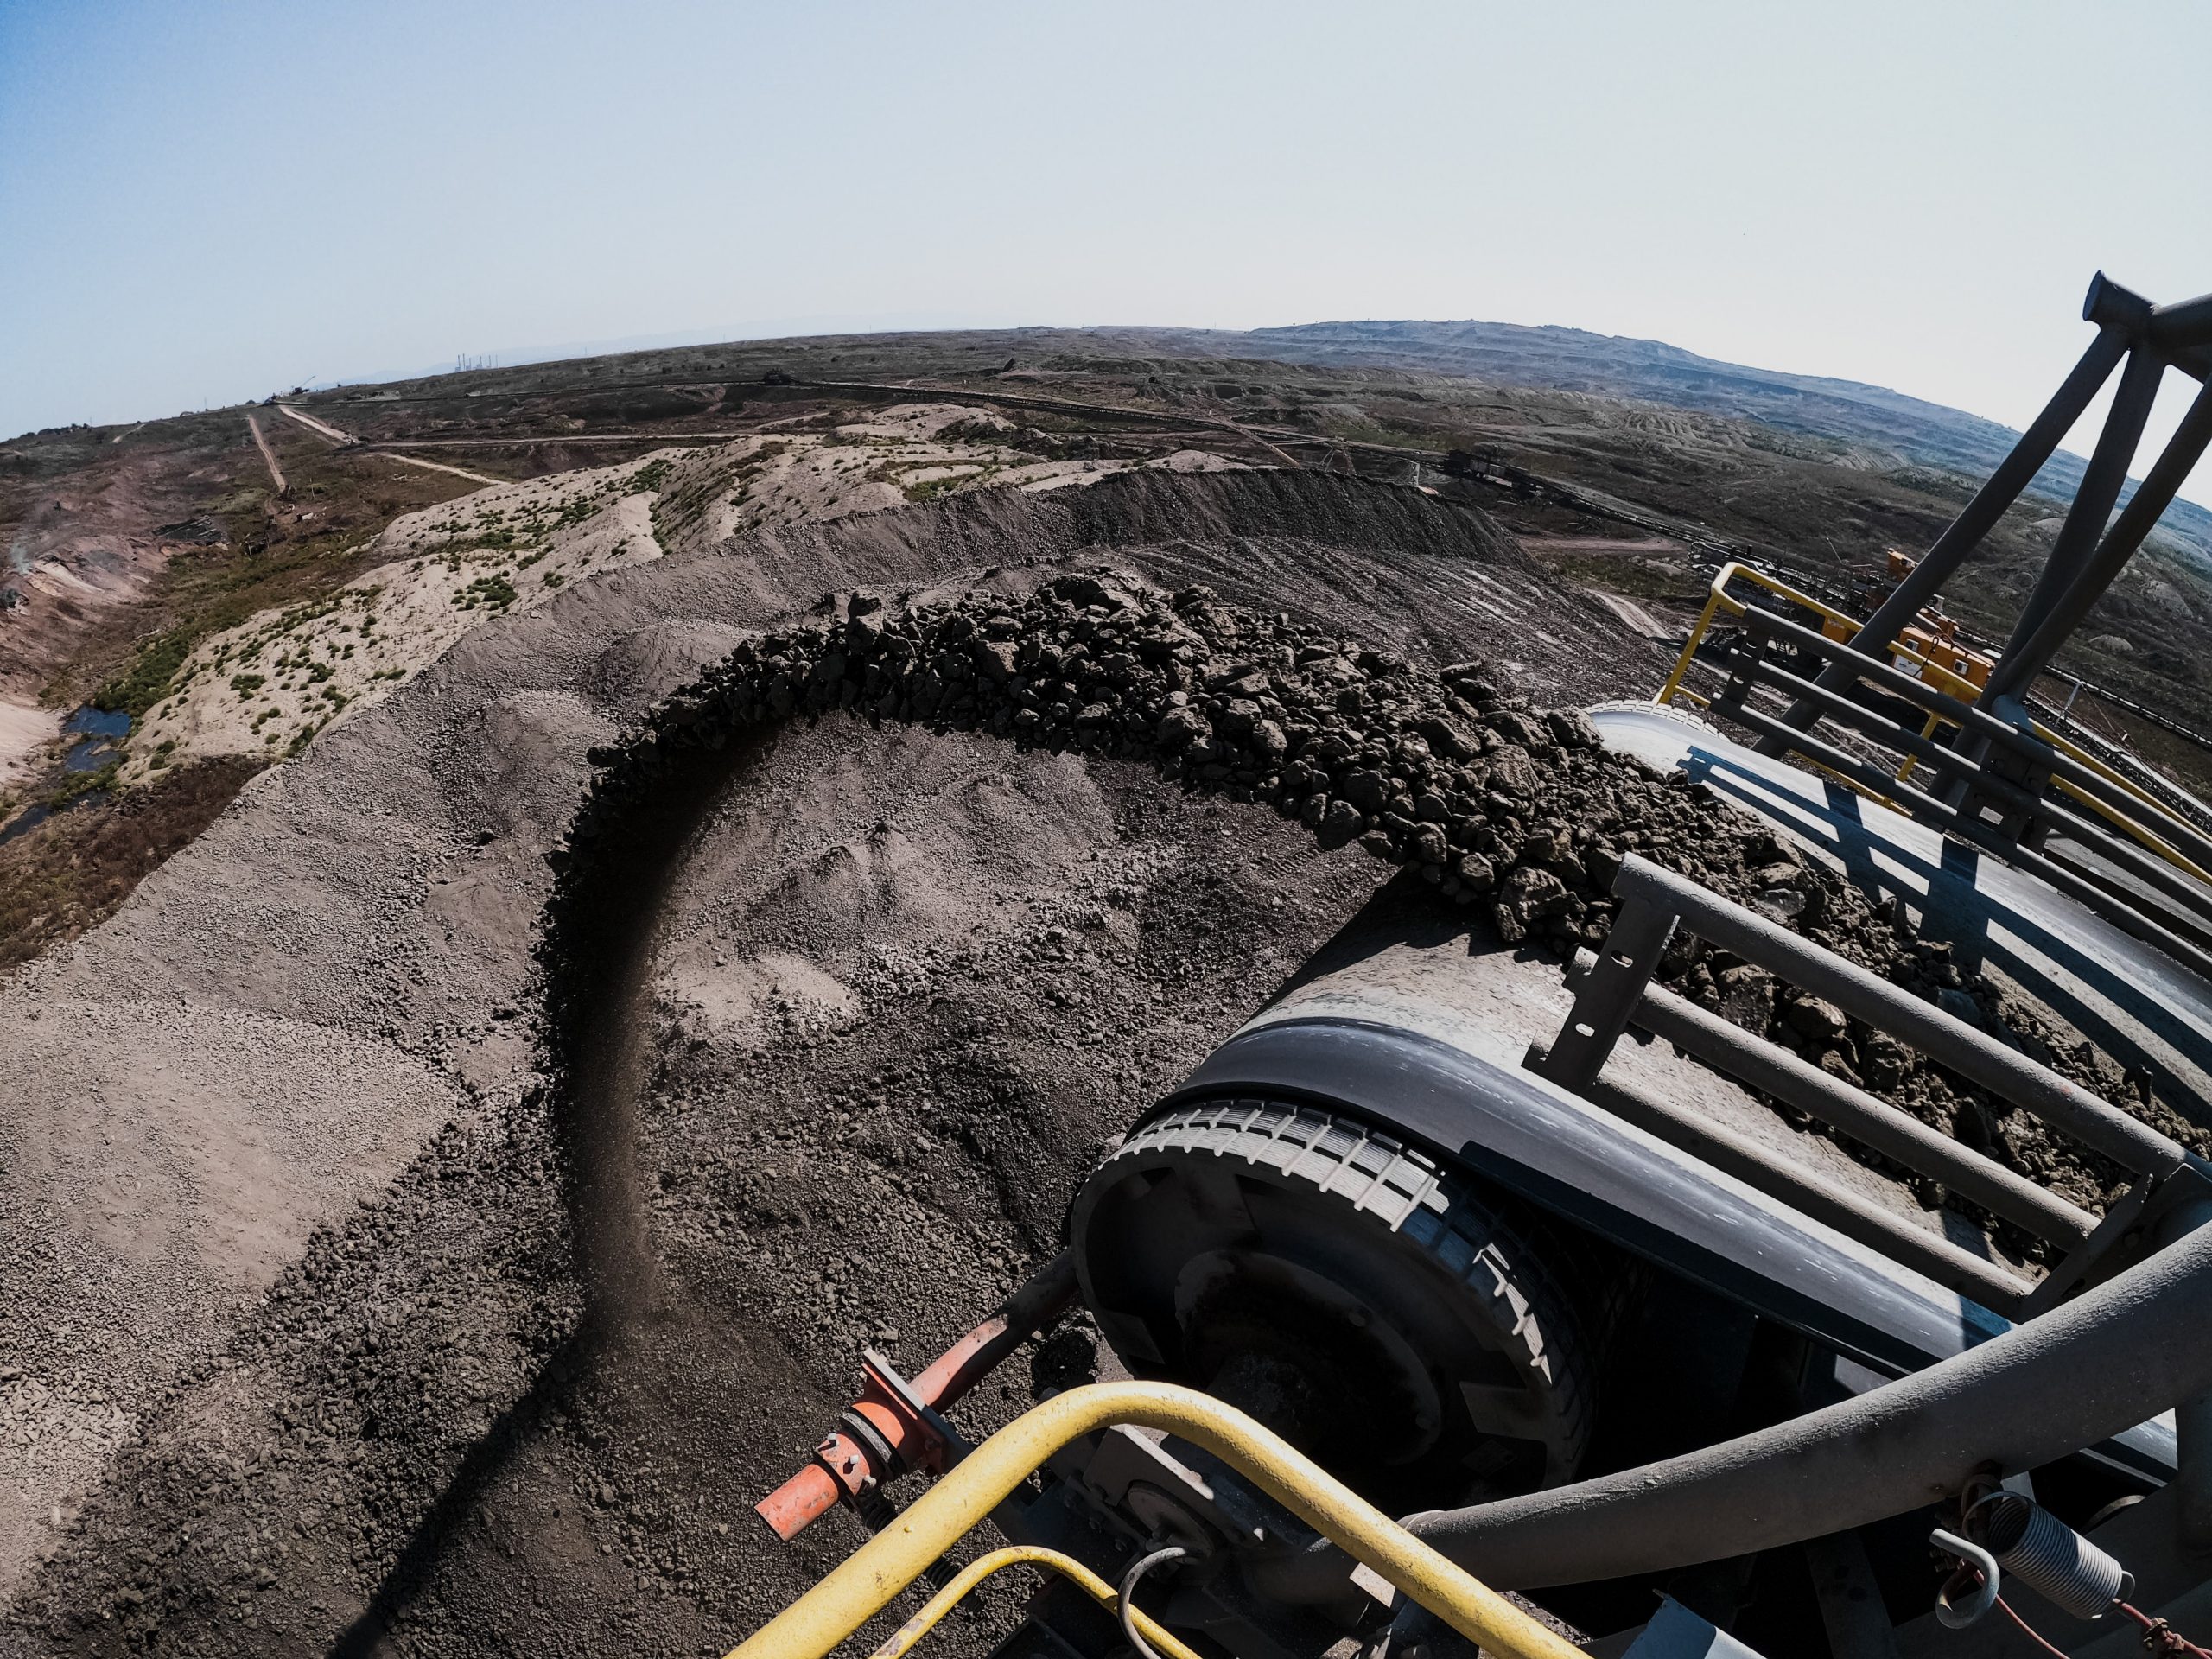 Pemerintah larang ekspor batu bara, cegah pemadaman 10 juta pelanggan PLN